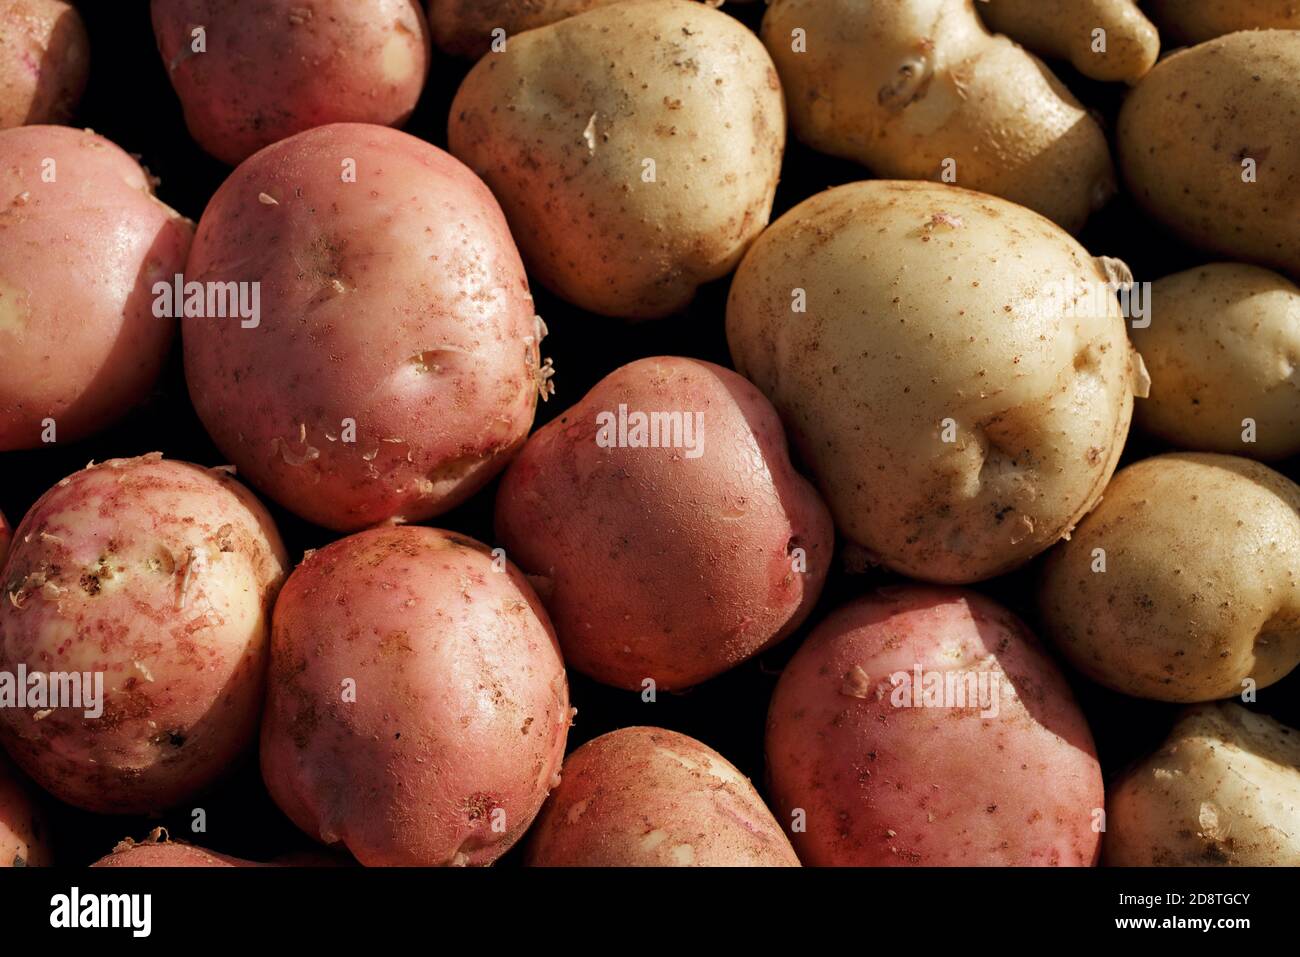 Fresh potato crop in full screen. White and red potato variety Stock Photo